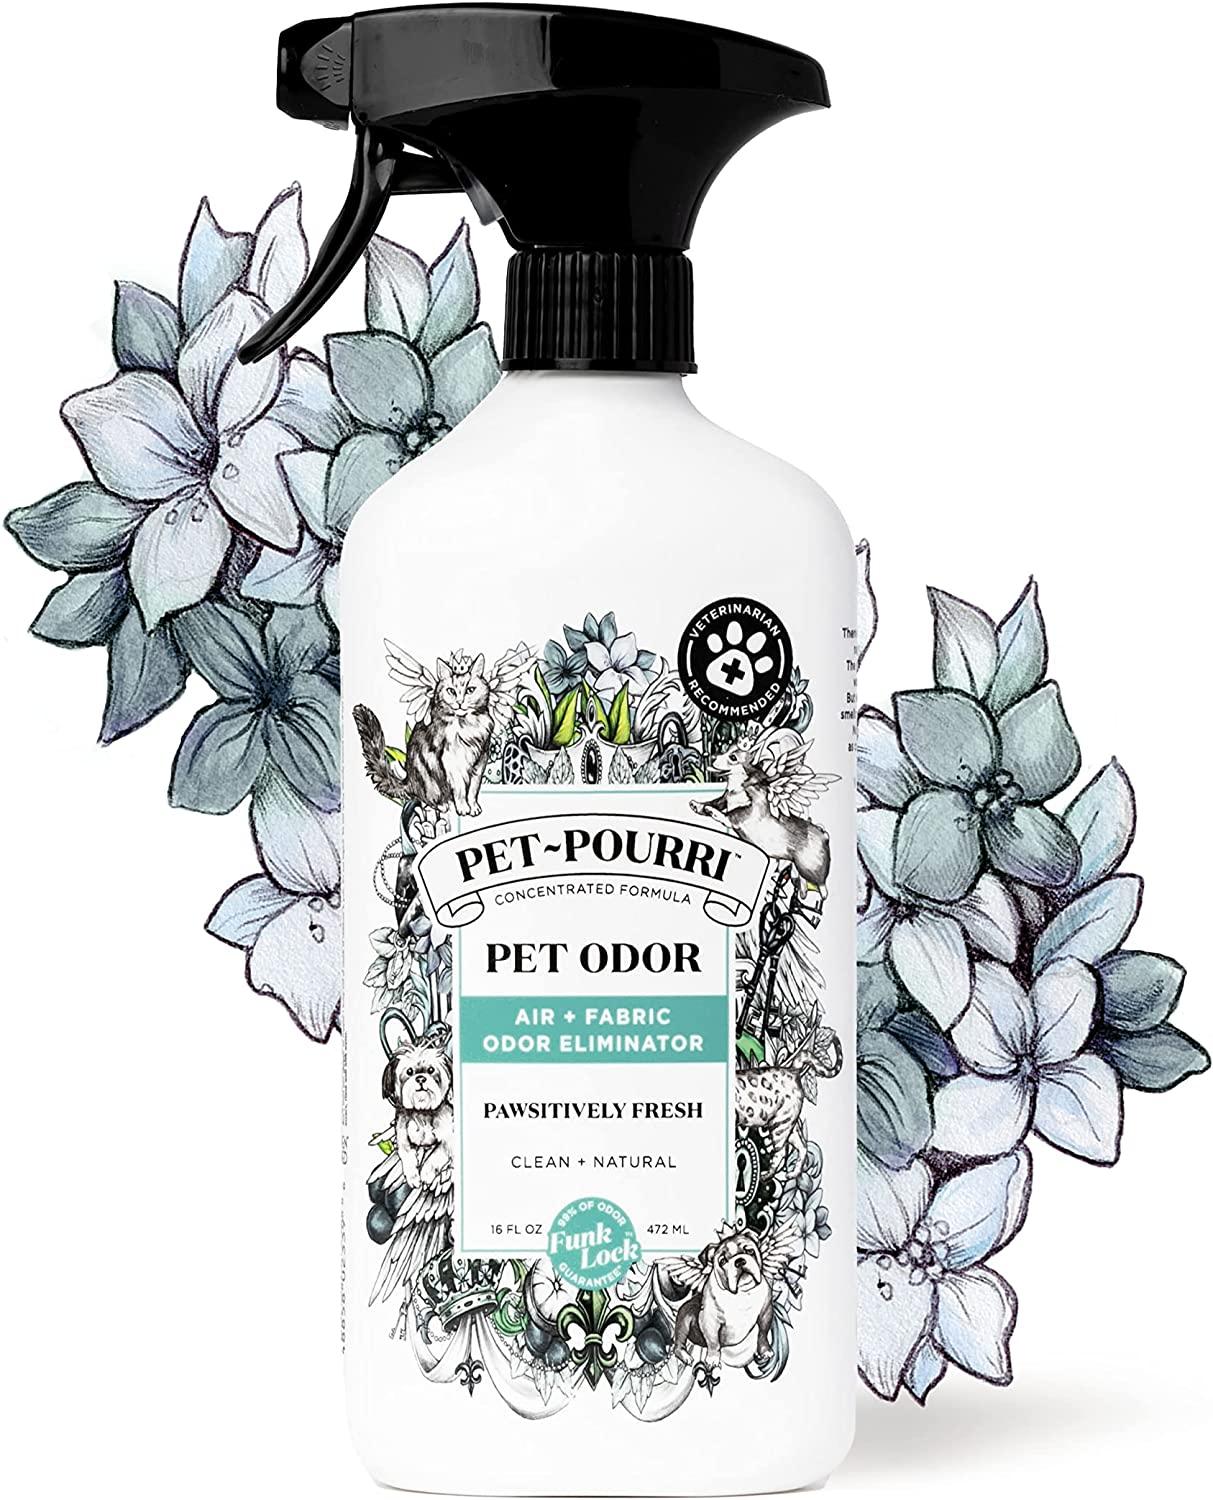 Poo-Pourri PetPourri Pawsitively Fresh, Clean + Natural Pet Odor Air +  Fabric Odor Eliminator Spray, On-The-Go Travel Size, 16 Fl Oz